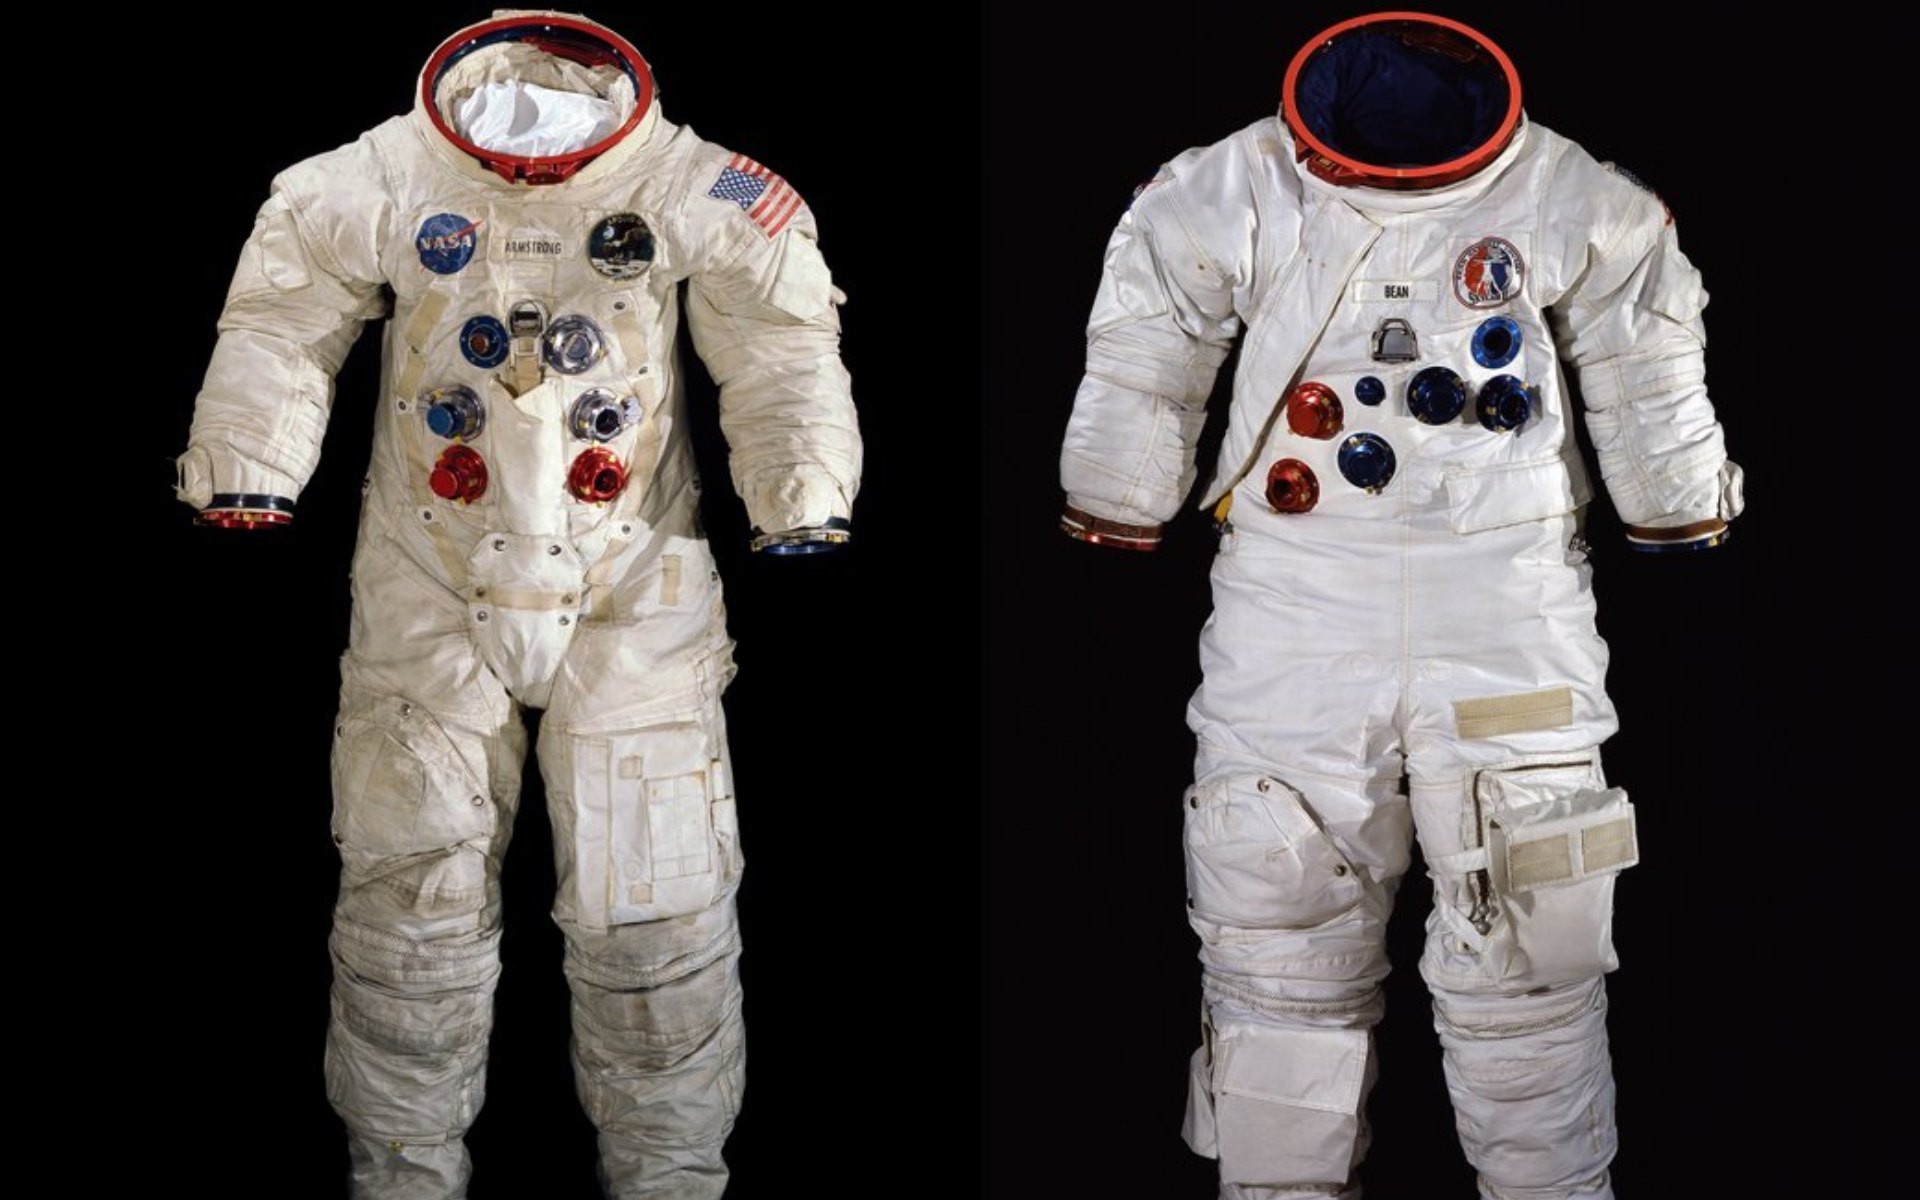 Скафандр дам. Скафандр Космонавта НАСА. Костюм астронавта NASA 134-146. Костюмы астронавтов Аполлон 11. Скафандр Аполлон 11.